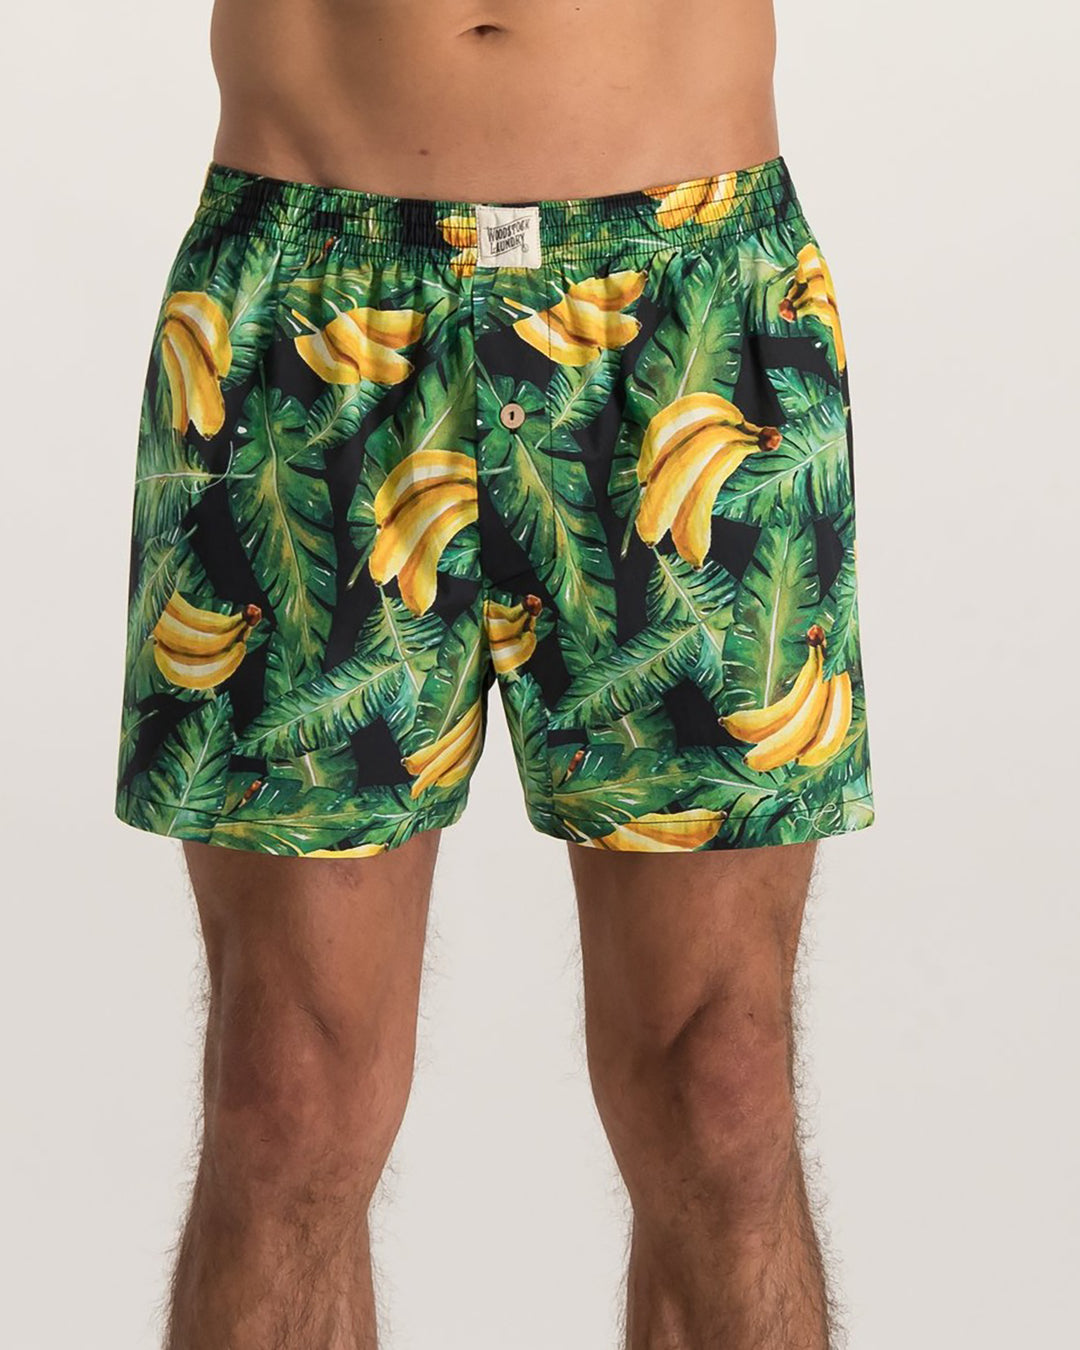 Mens Boxer Shorts Bananas on Leaves - Woodstock Laundry